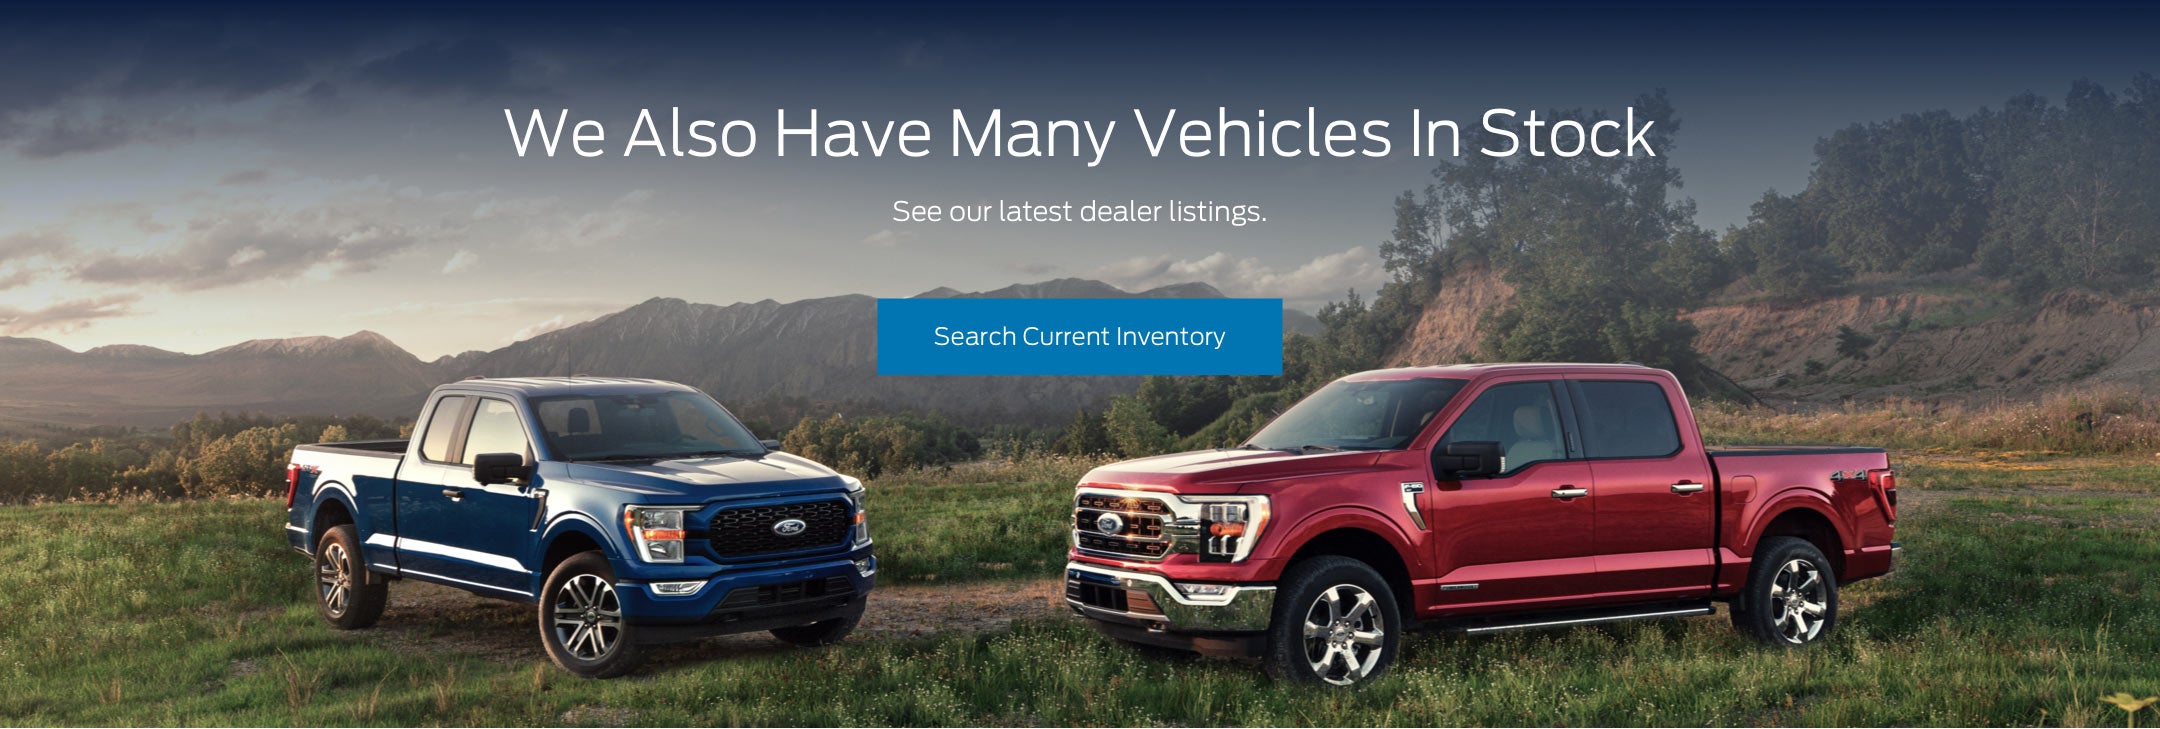 Ford vehicles in stock | Rush Truck Centers - Oklahoma City in Oklahoma City OK